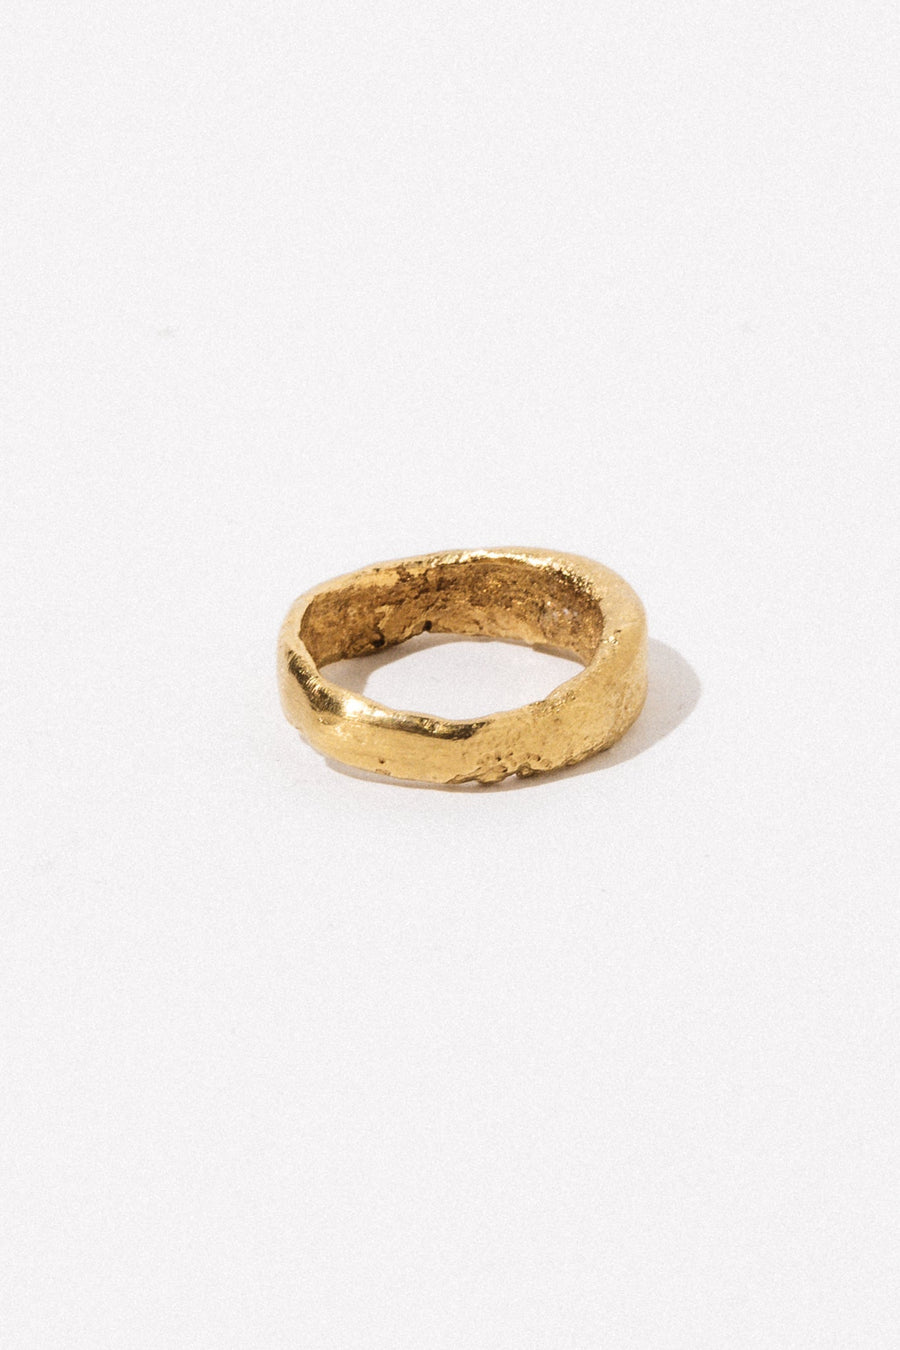 JUNO Jewelry US 8 / Brass Luna Ring